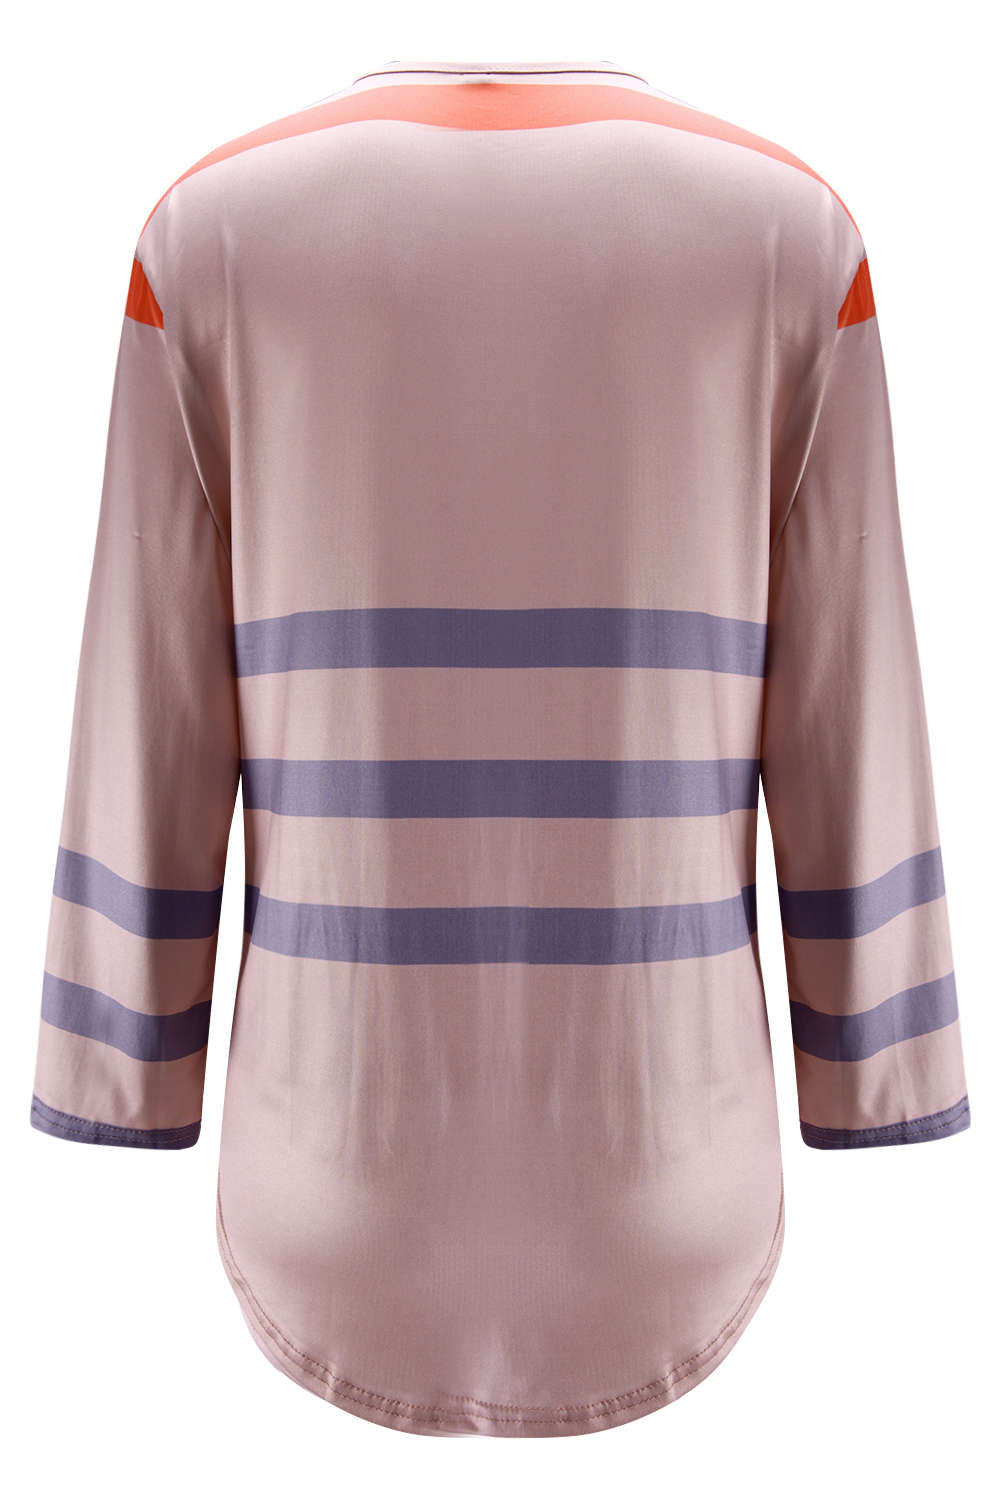 Iyasson Women's Plaid Print Hemden 3/4 Armel Bluse T-Shirt Oberteile Tops